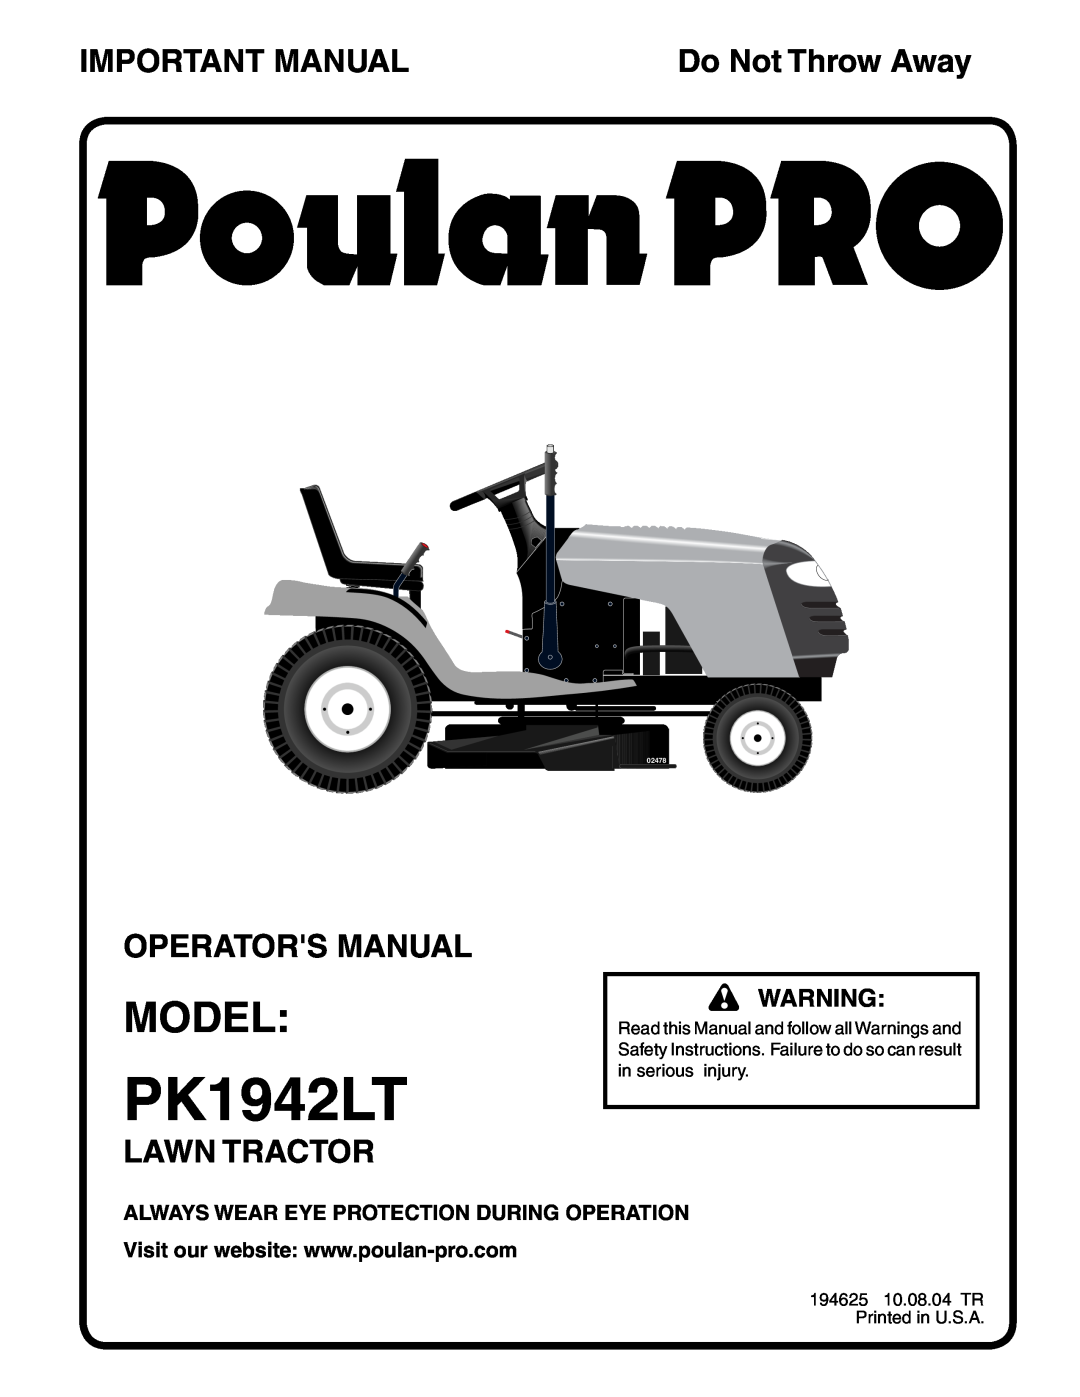 Poulan PK1942LT manual Model, Important Manual, Operators Manual, Lawn Tractor, Do Not Throw Away, 02478 